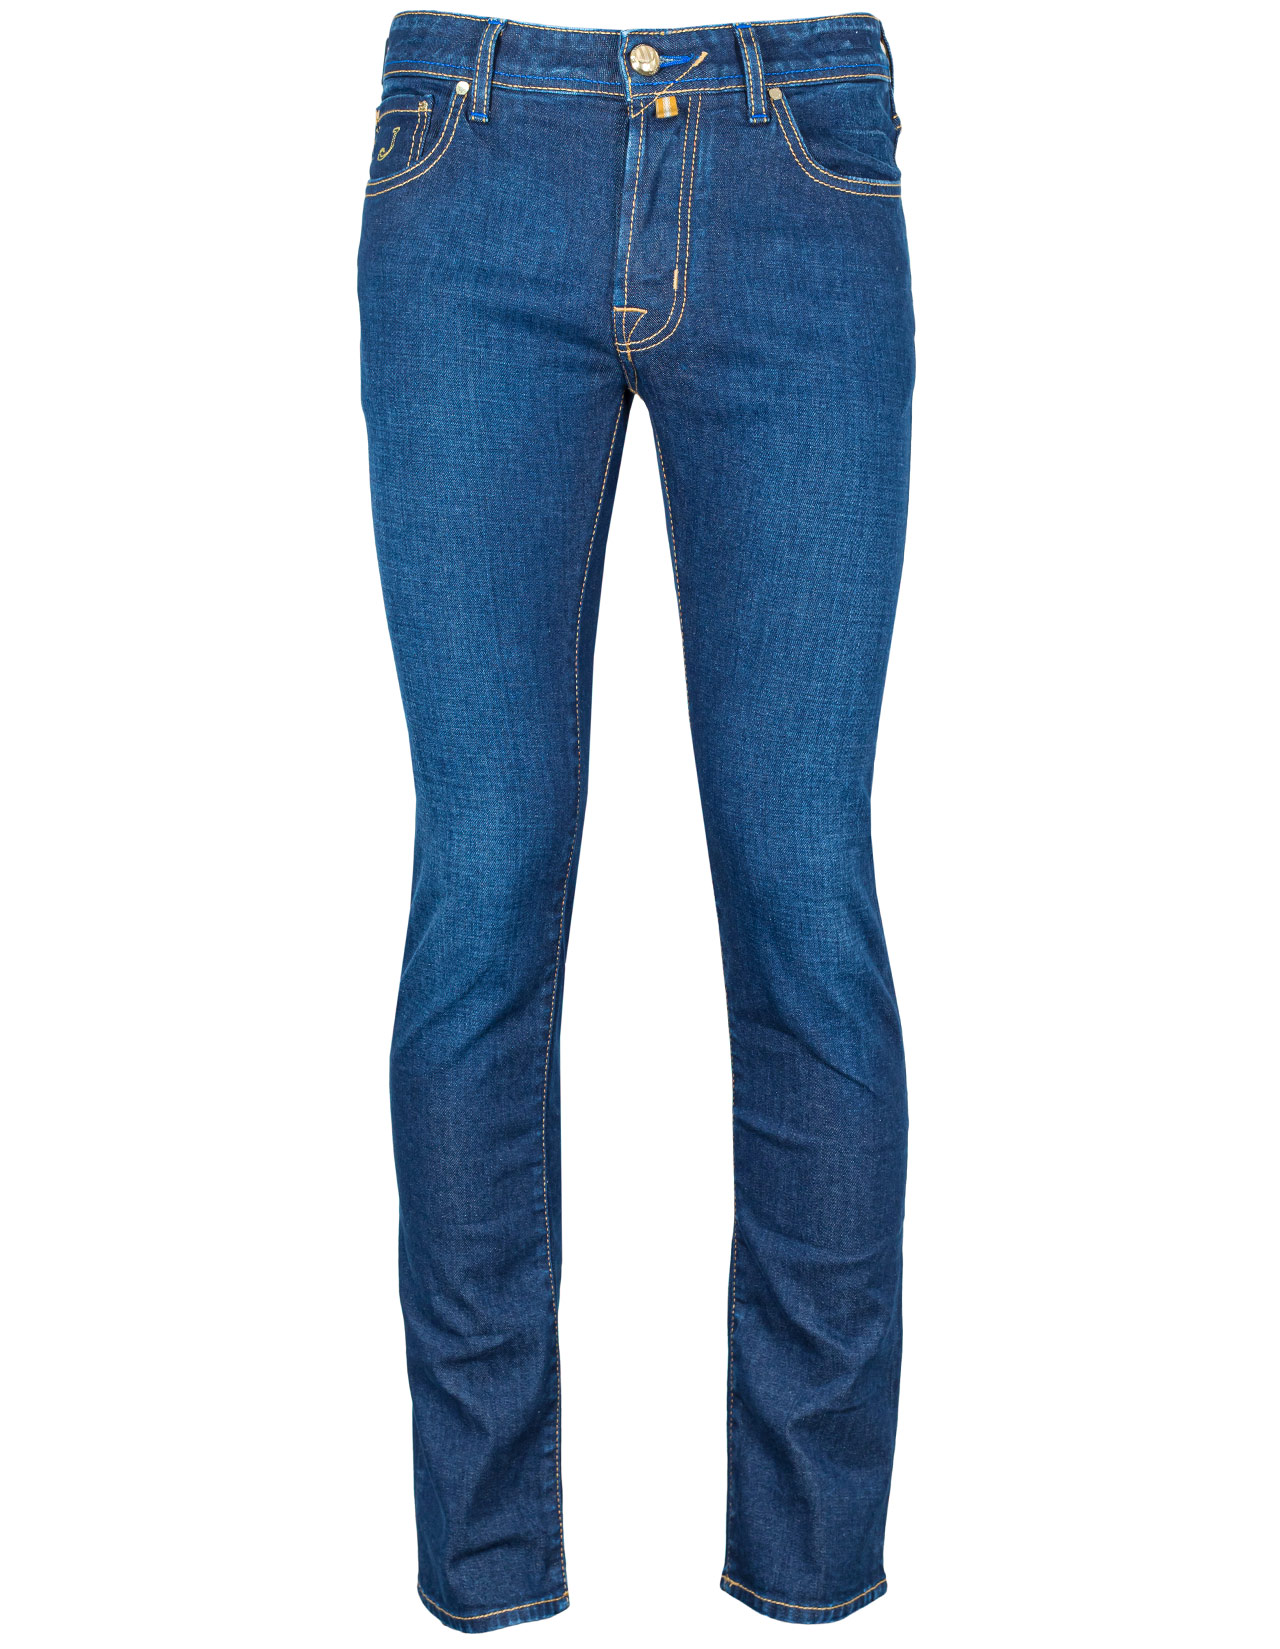 Jacob Cohen Jeans BARD "Premium Edition Denim" in dunkelblau